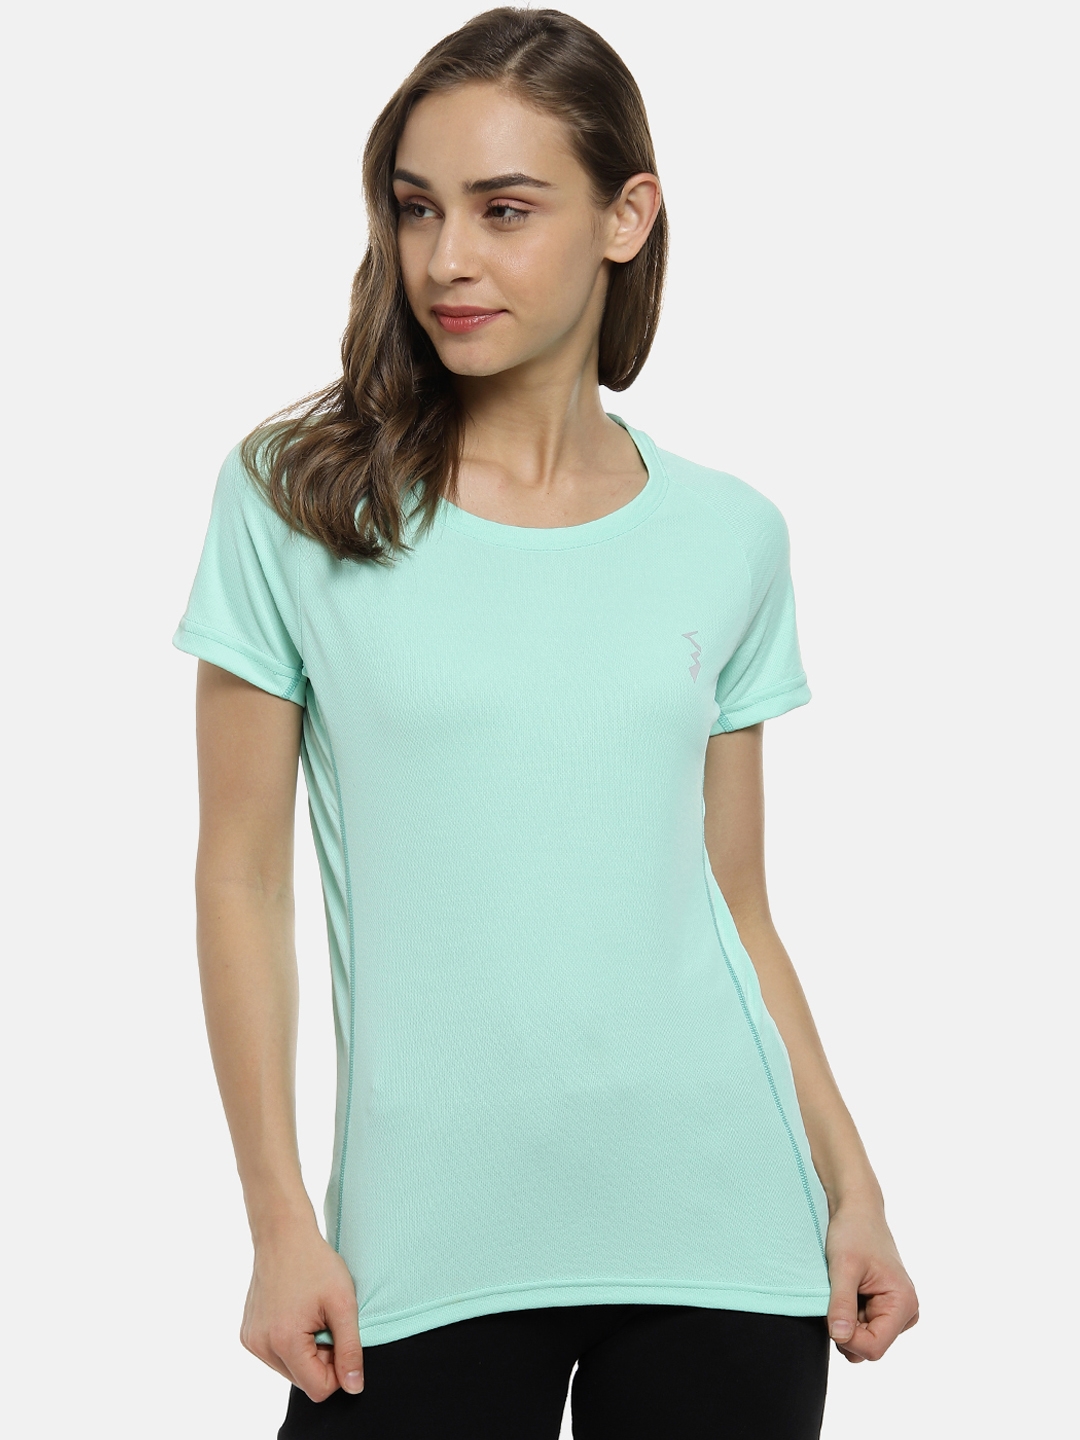 Campus Sutra Women Sea Green Solid Round Neck T shirt